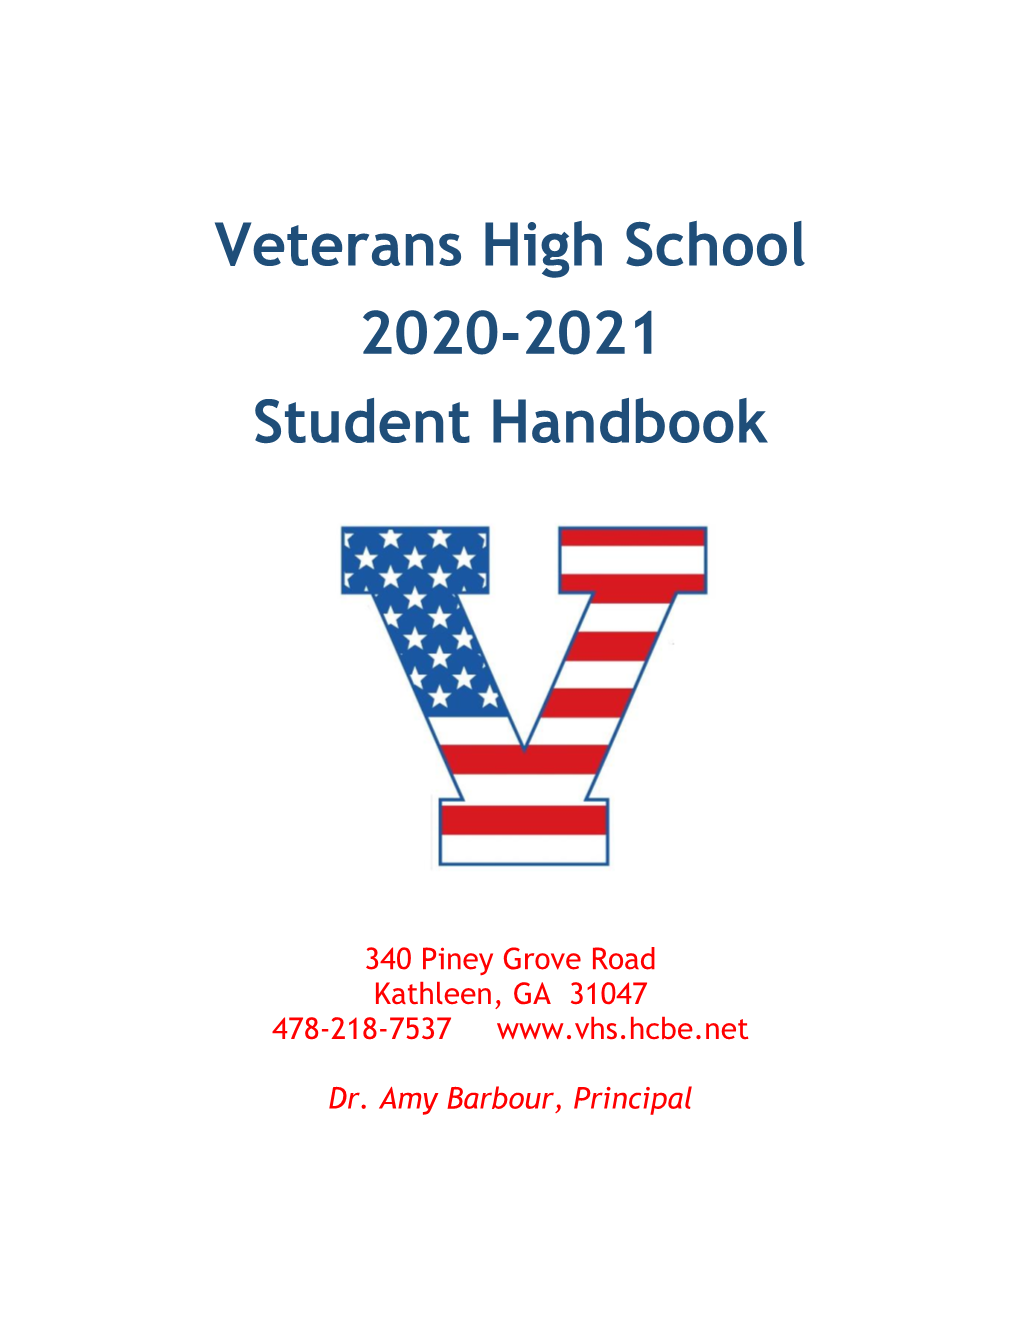 Veterans High School 2020-2021 Student Handbook